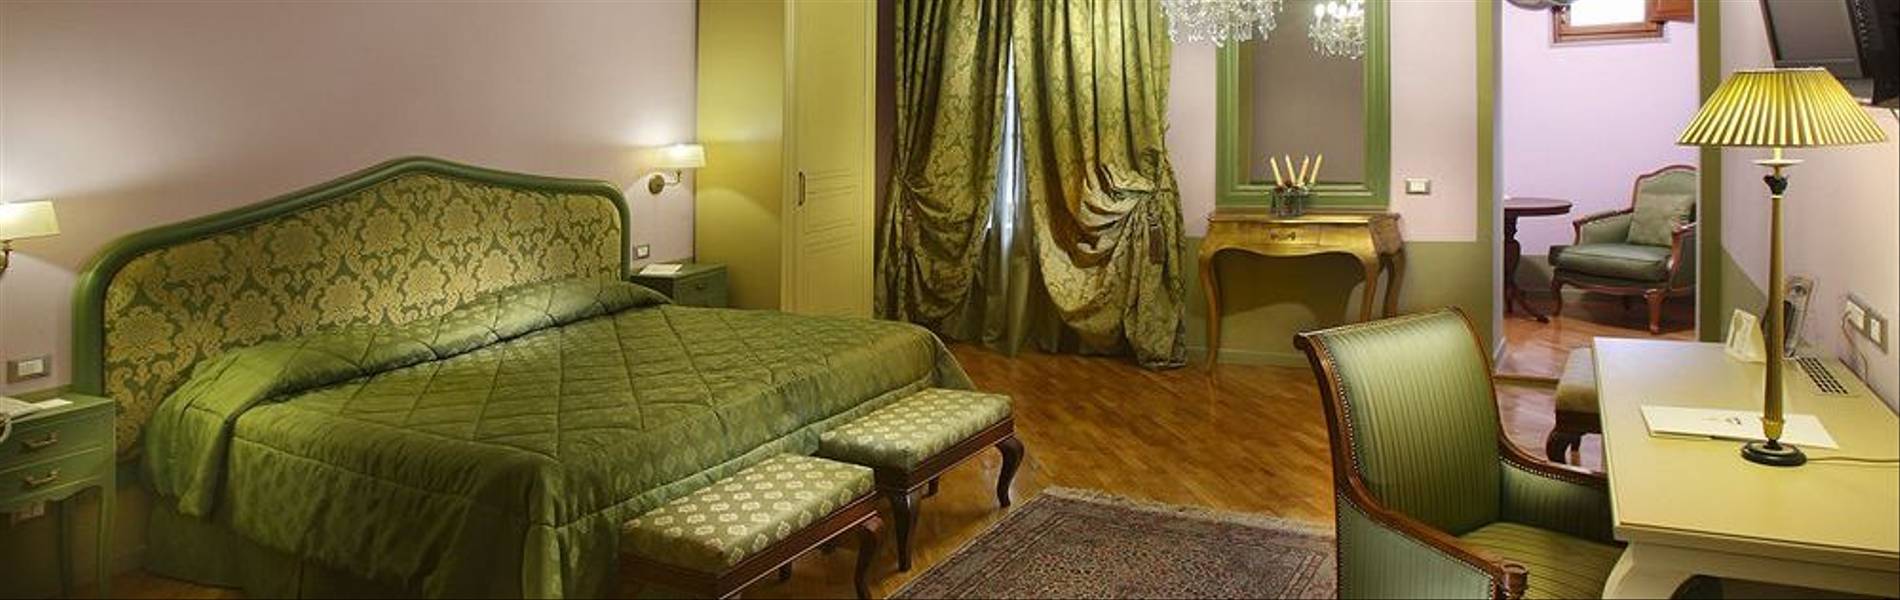 08-Hotel San Luca Palace.jpg